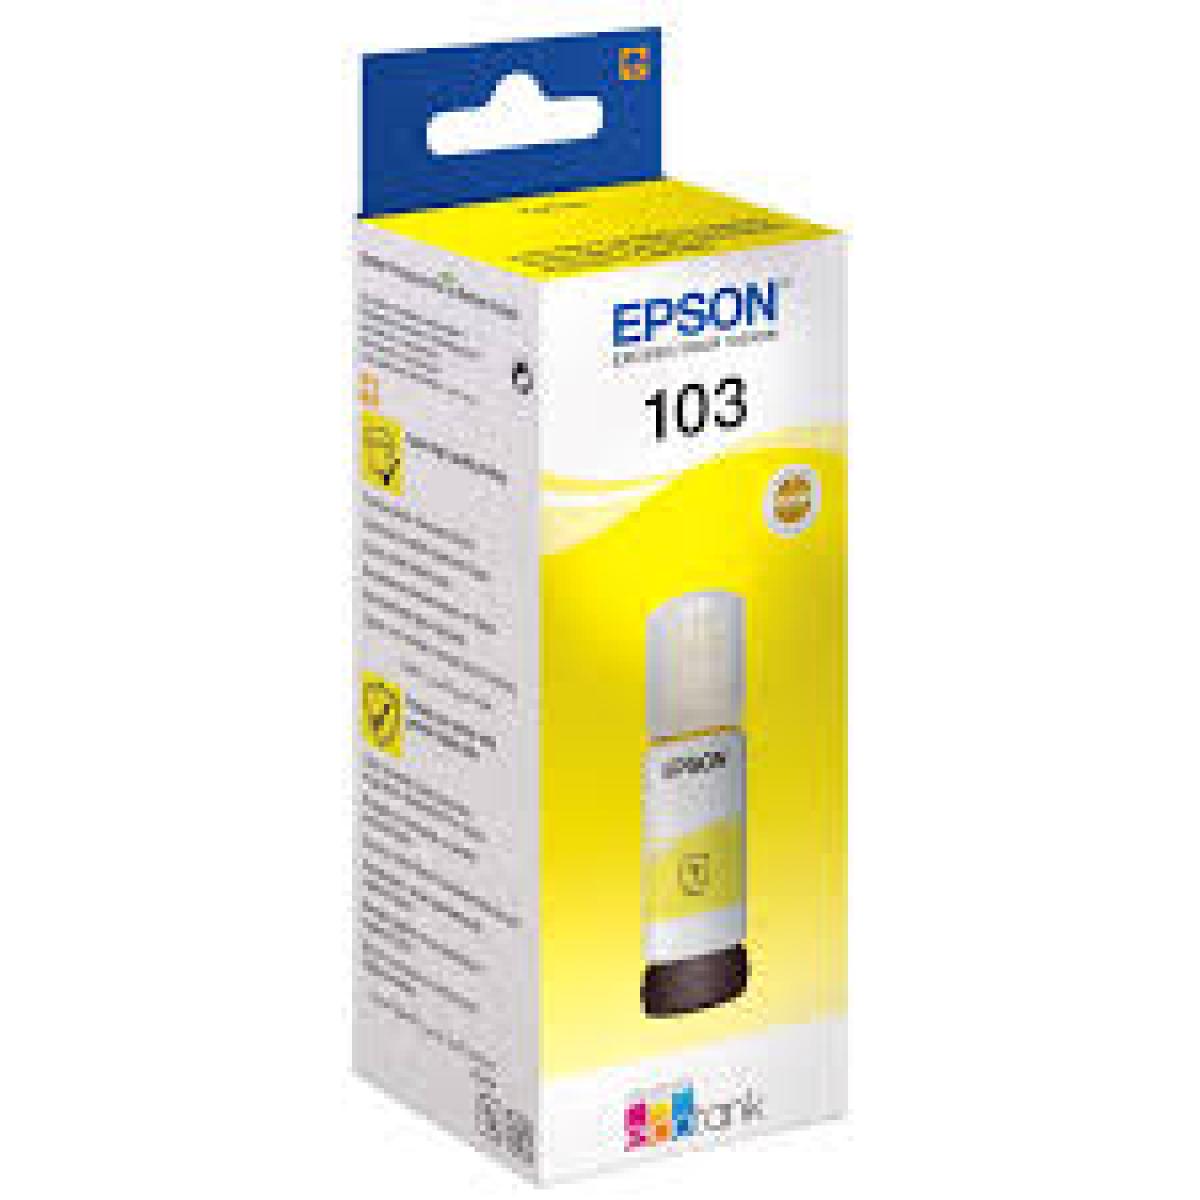 Epson Ink 103 Yellow (Original)